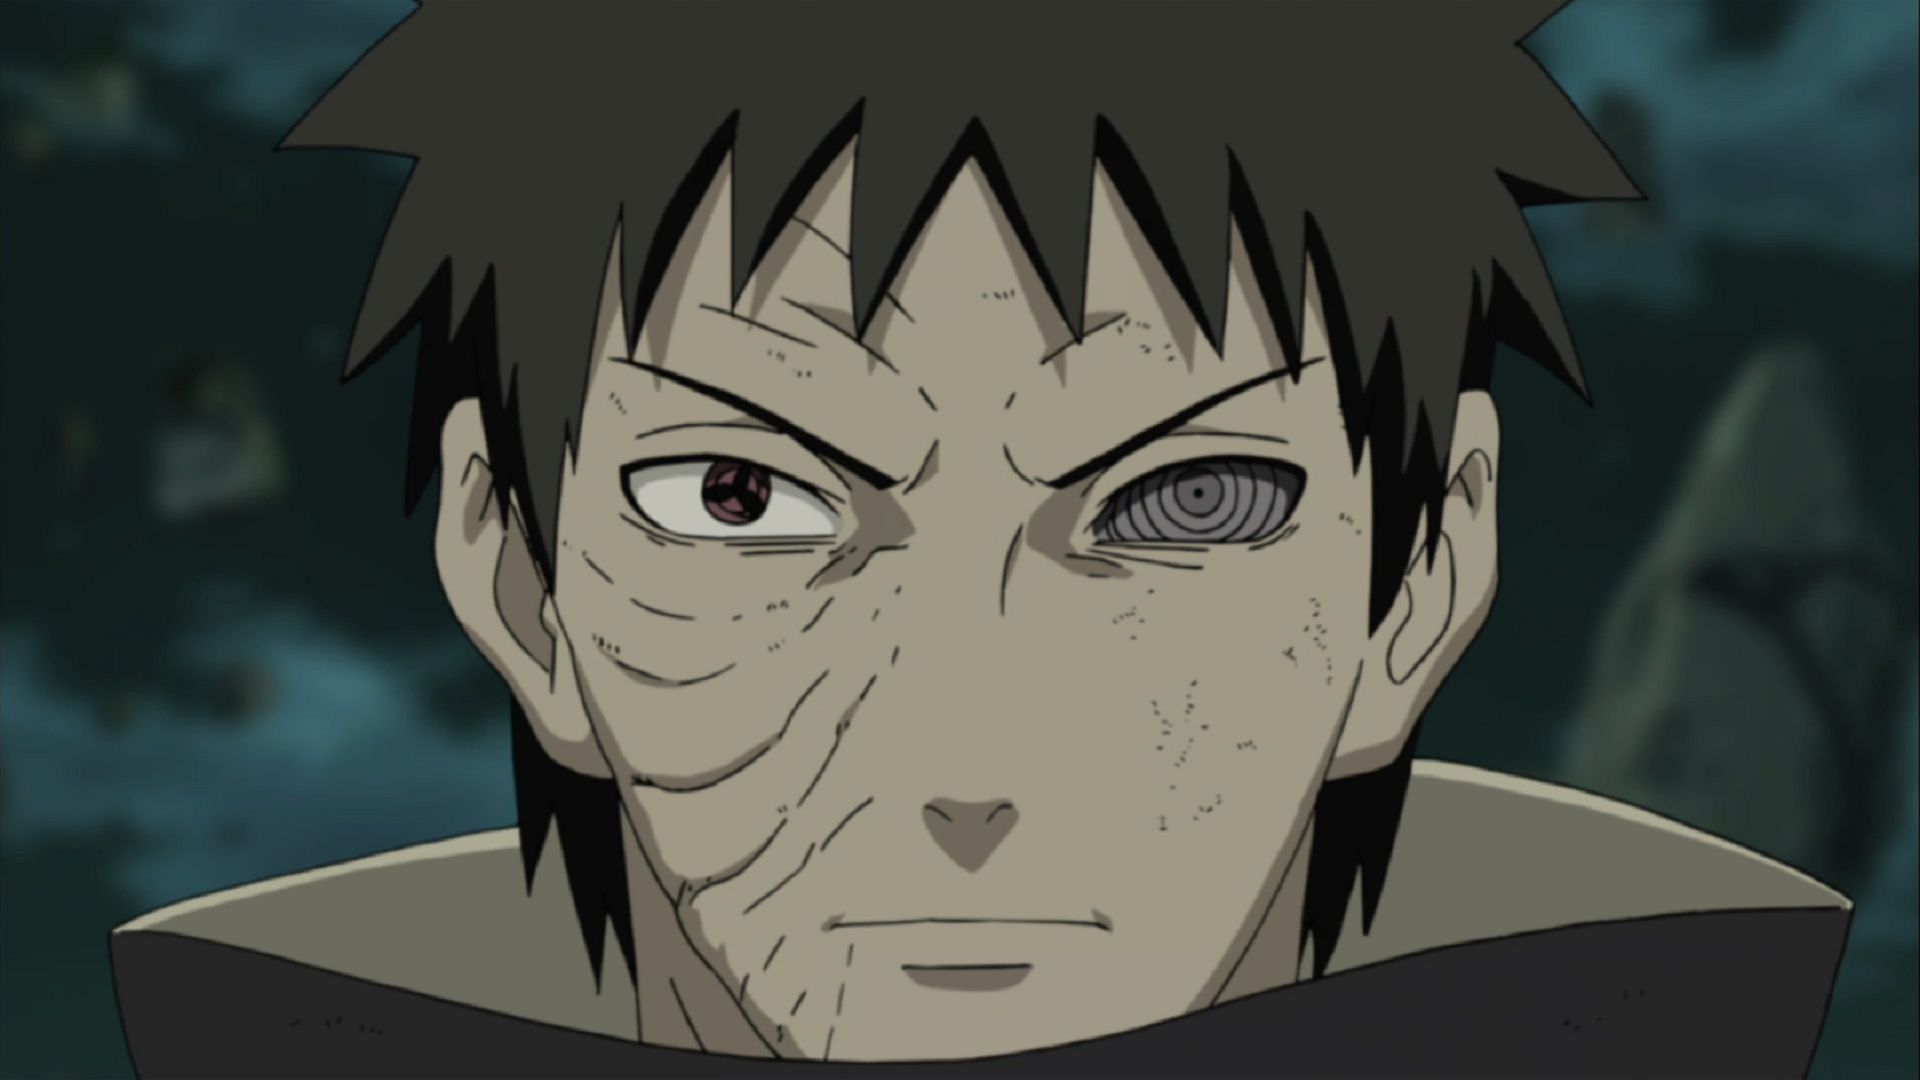 Obito Uchiha, as seen in Naruto Shippuden (Image via Studio Pierrot)